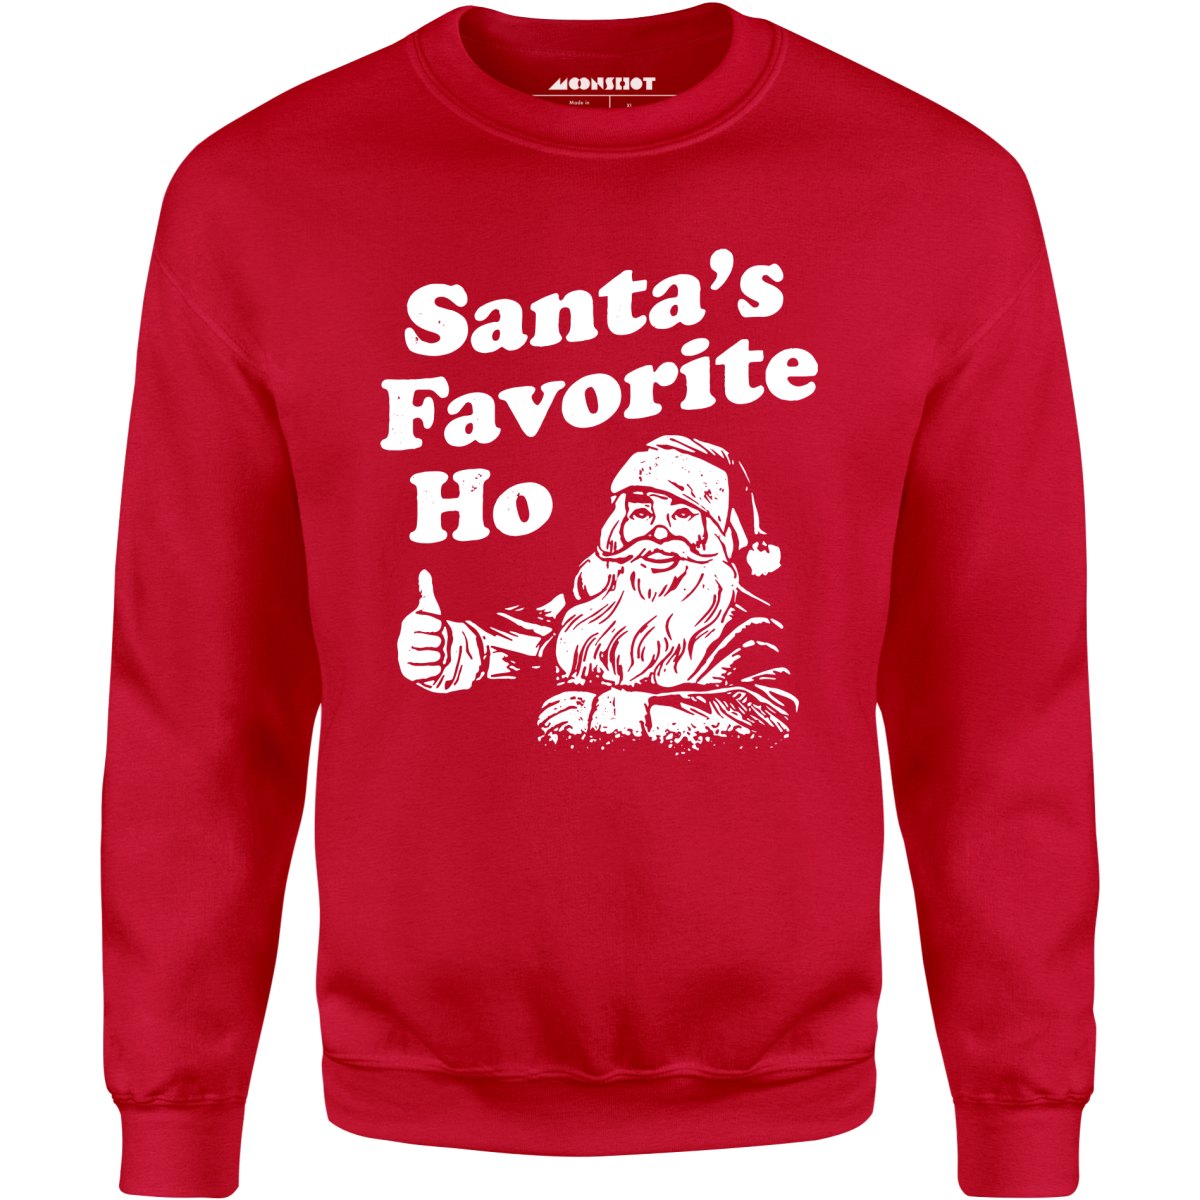 Santa's Favorite Ho - Unisex Sweatshirt